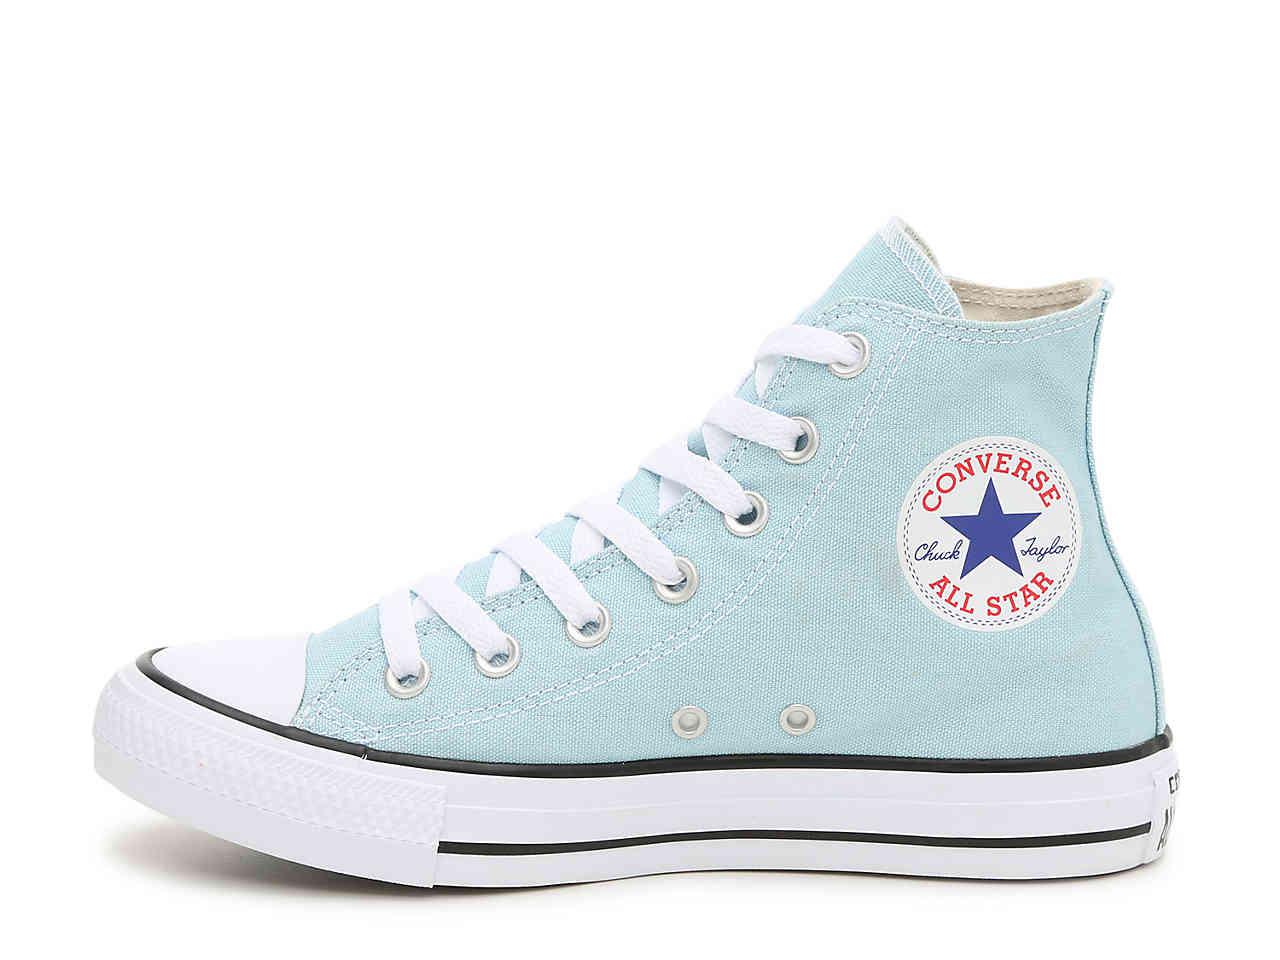 Lyst - Converse Chuck Taylor All Star Hi High-top Sneaker in Blue